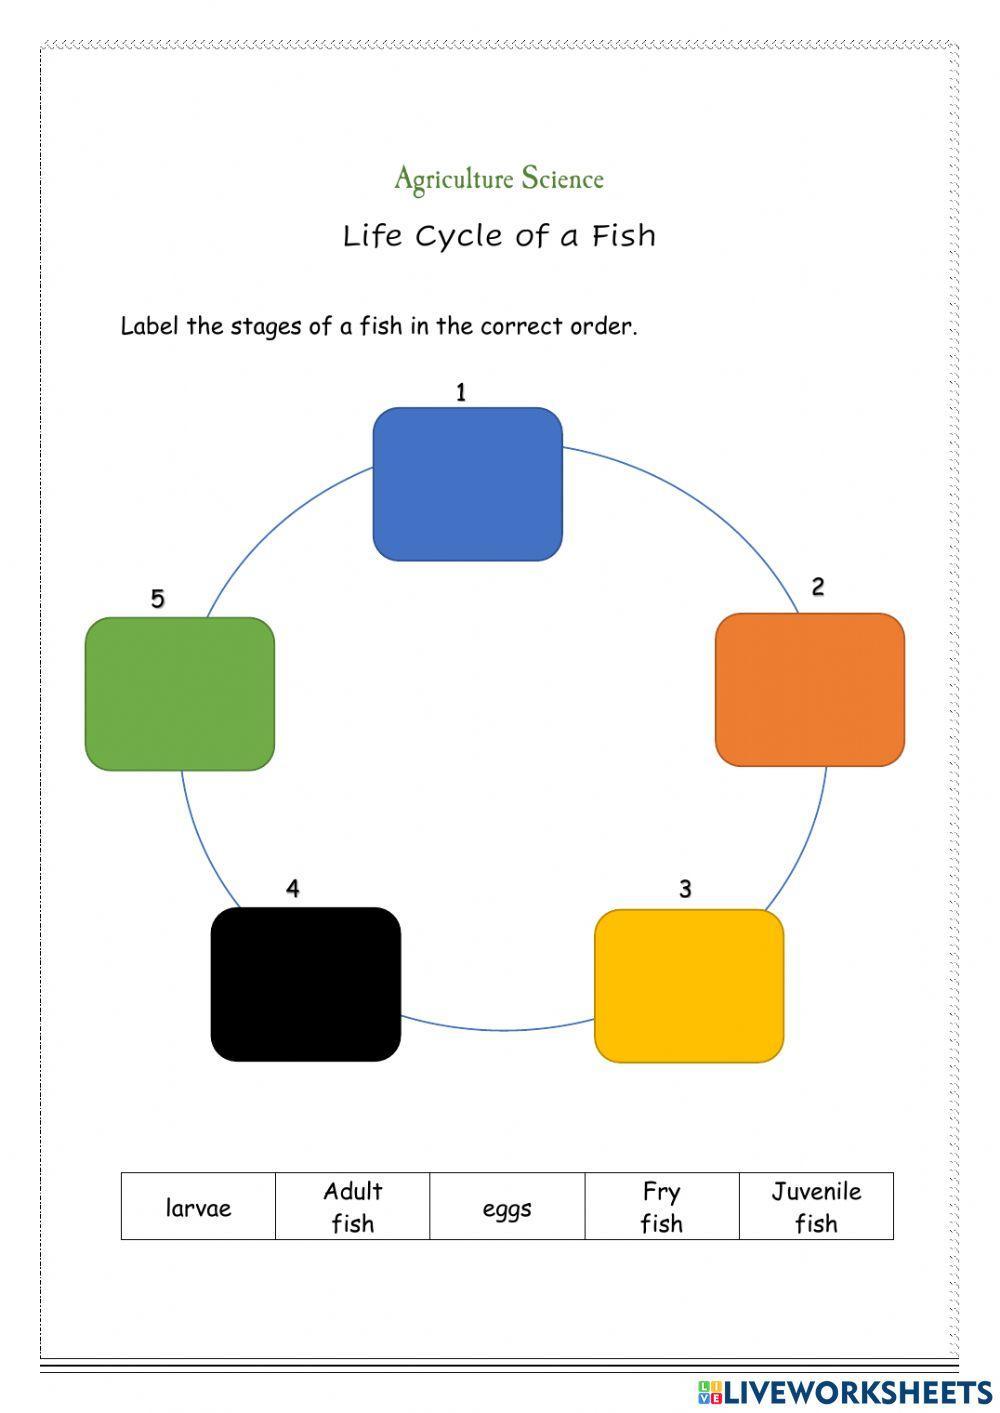 Life Cycle of a Fish